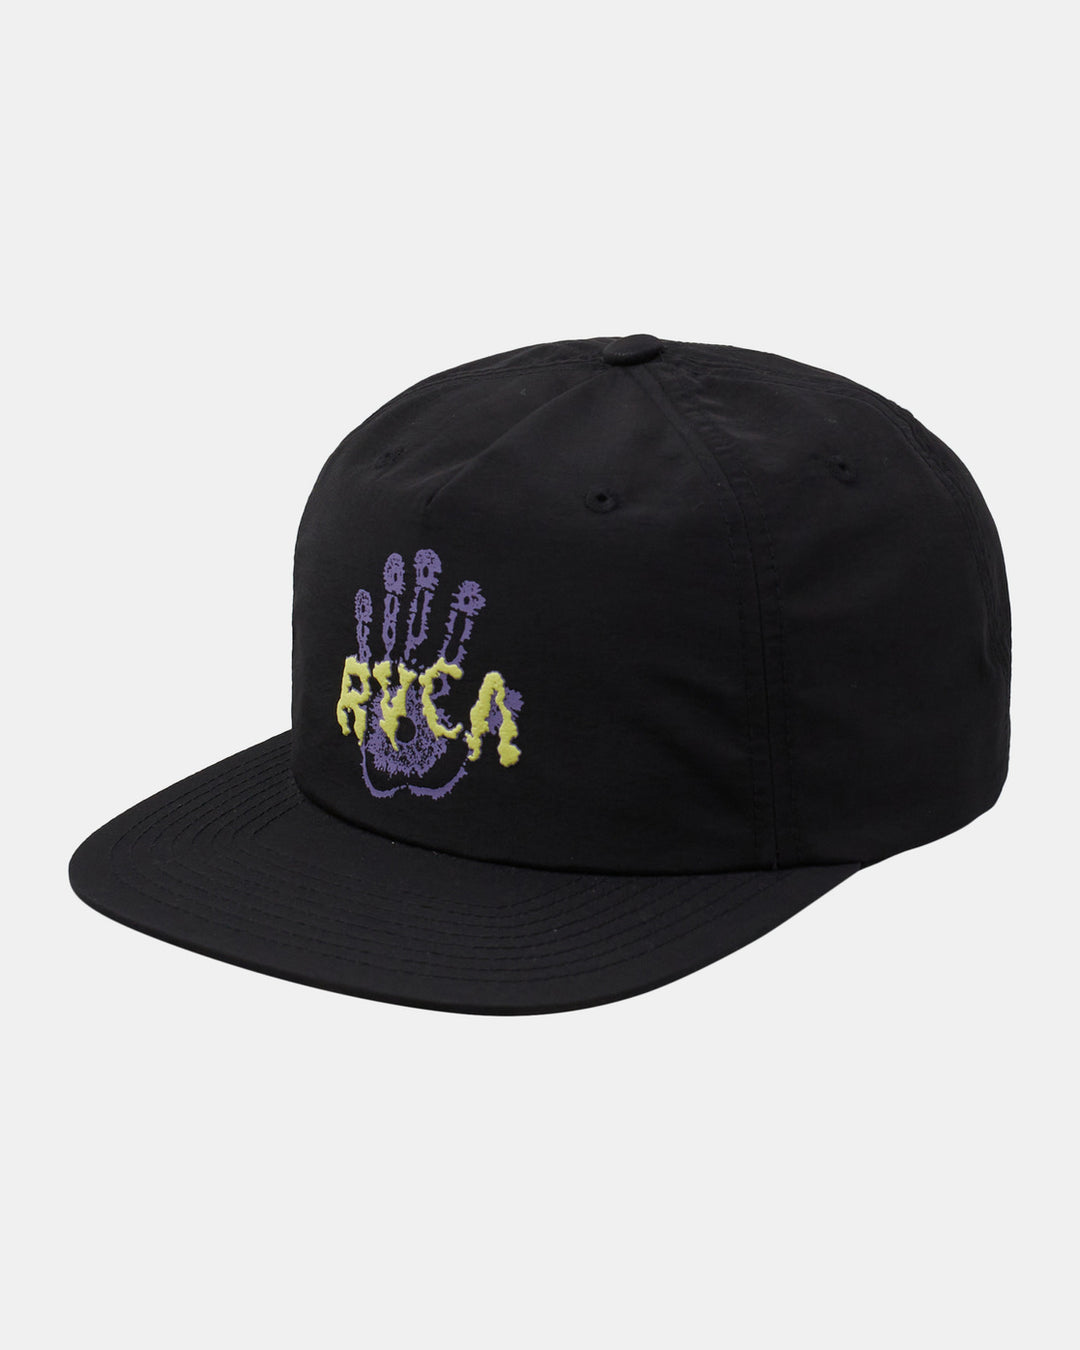 RVCA Matter At Hand Snapback Hat - Black - Sun Diego Boardshop